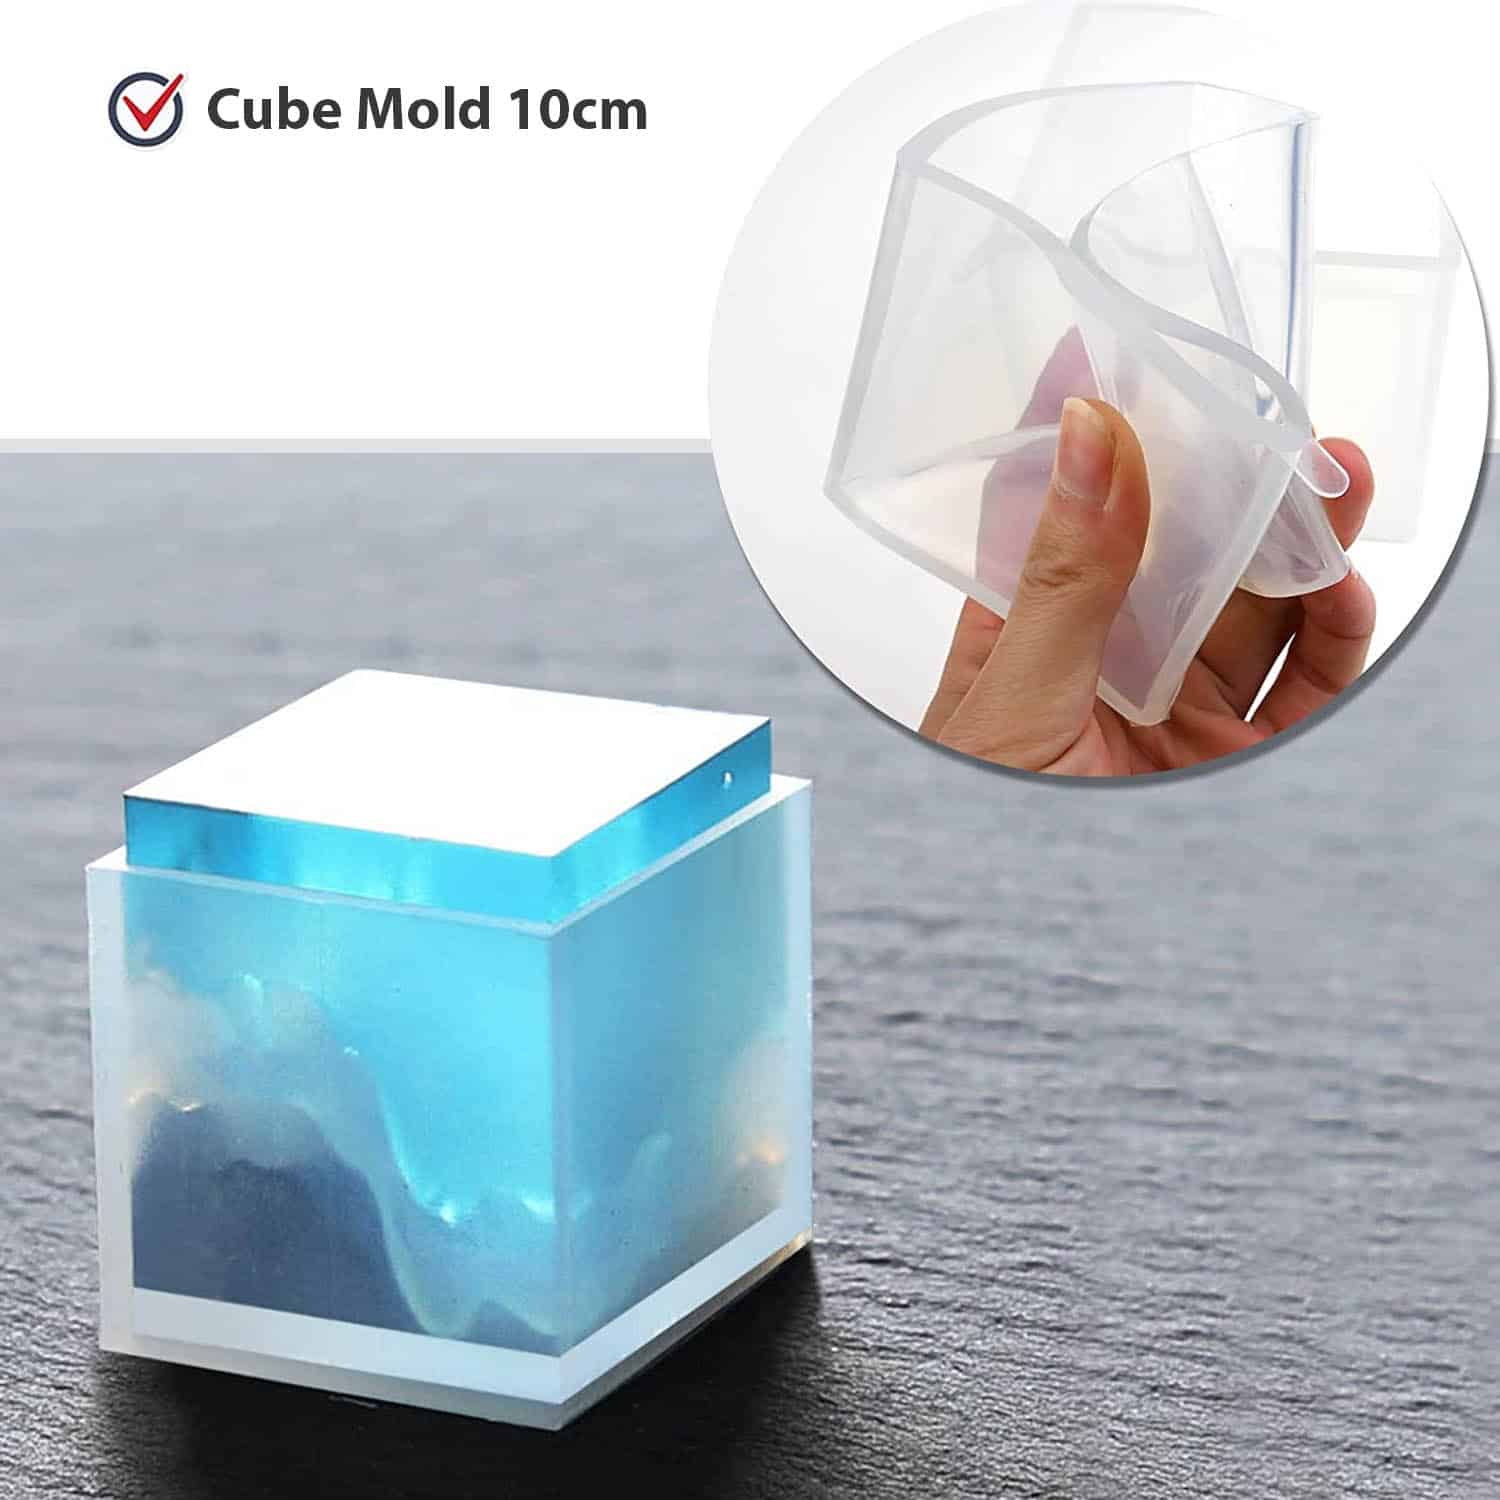 Cube Mold 10 cm - Resintools.co